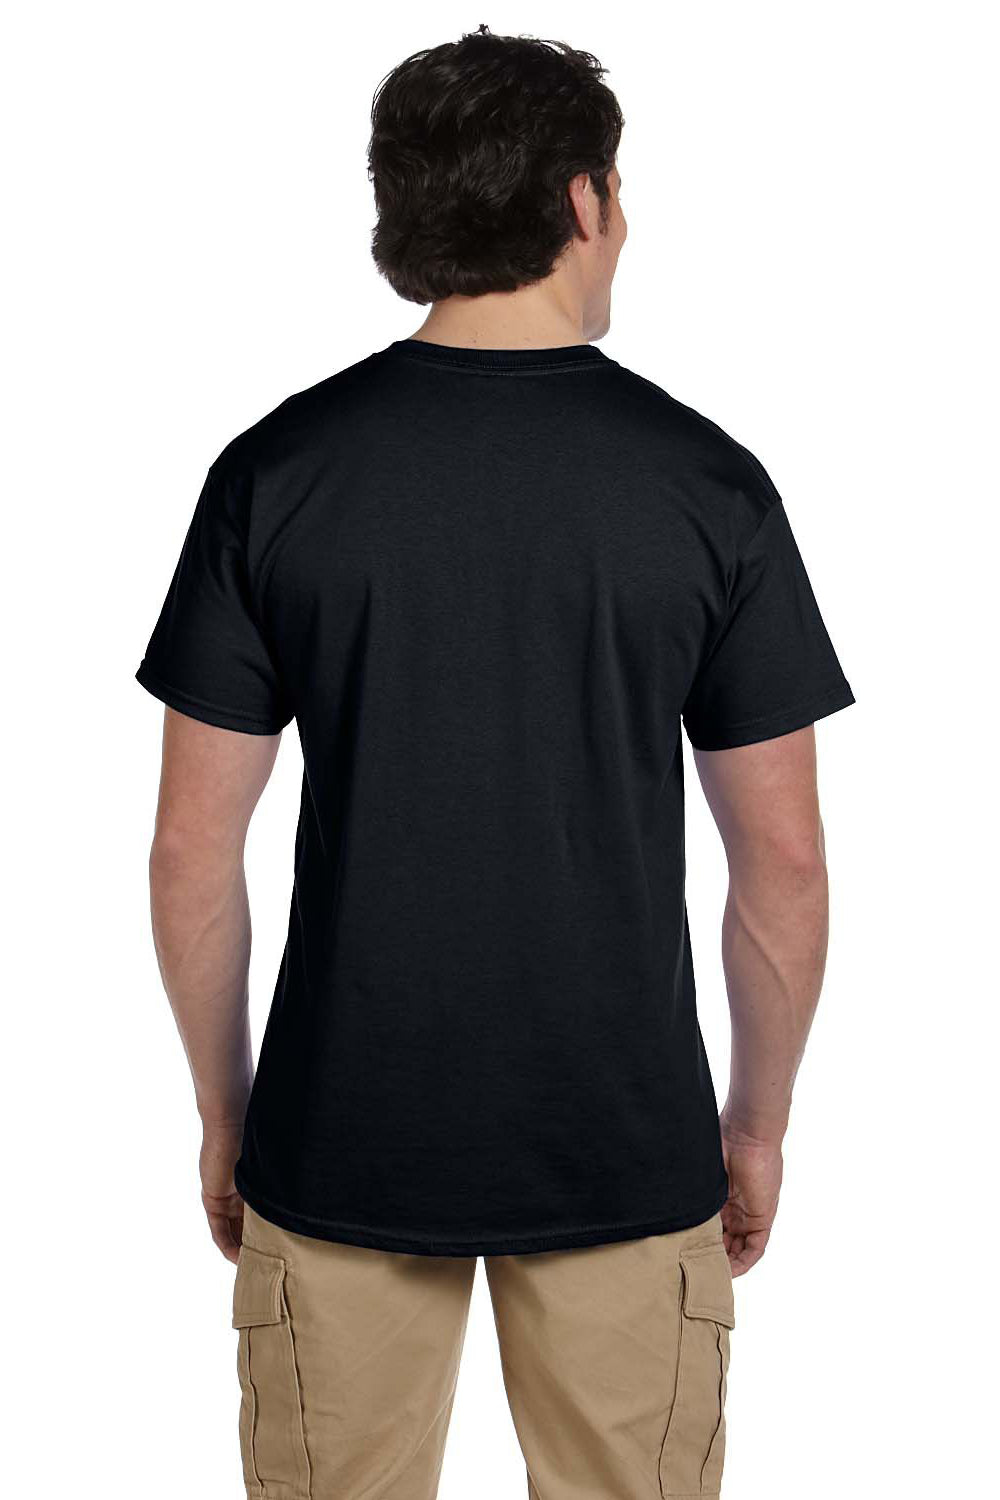 Fruit Of The Loom 3931 Mens HD Jersey Short Sleeve Crewneck T-Shirt Black Back